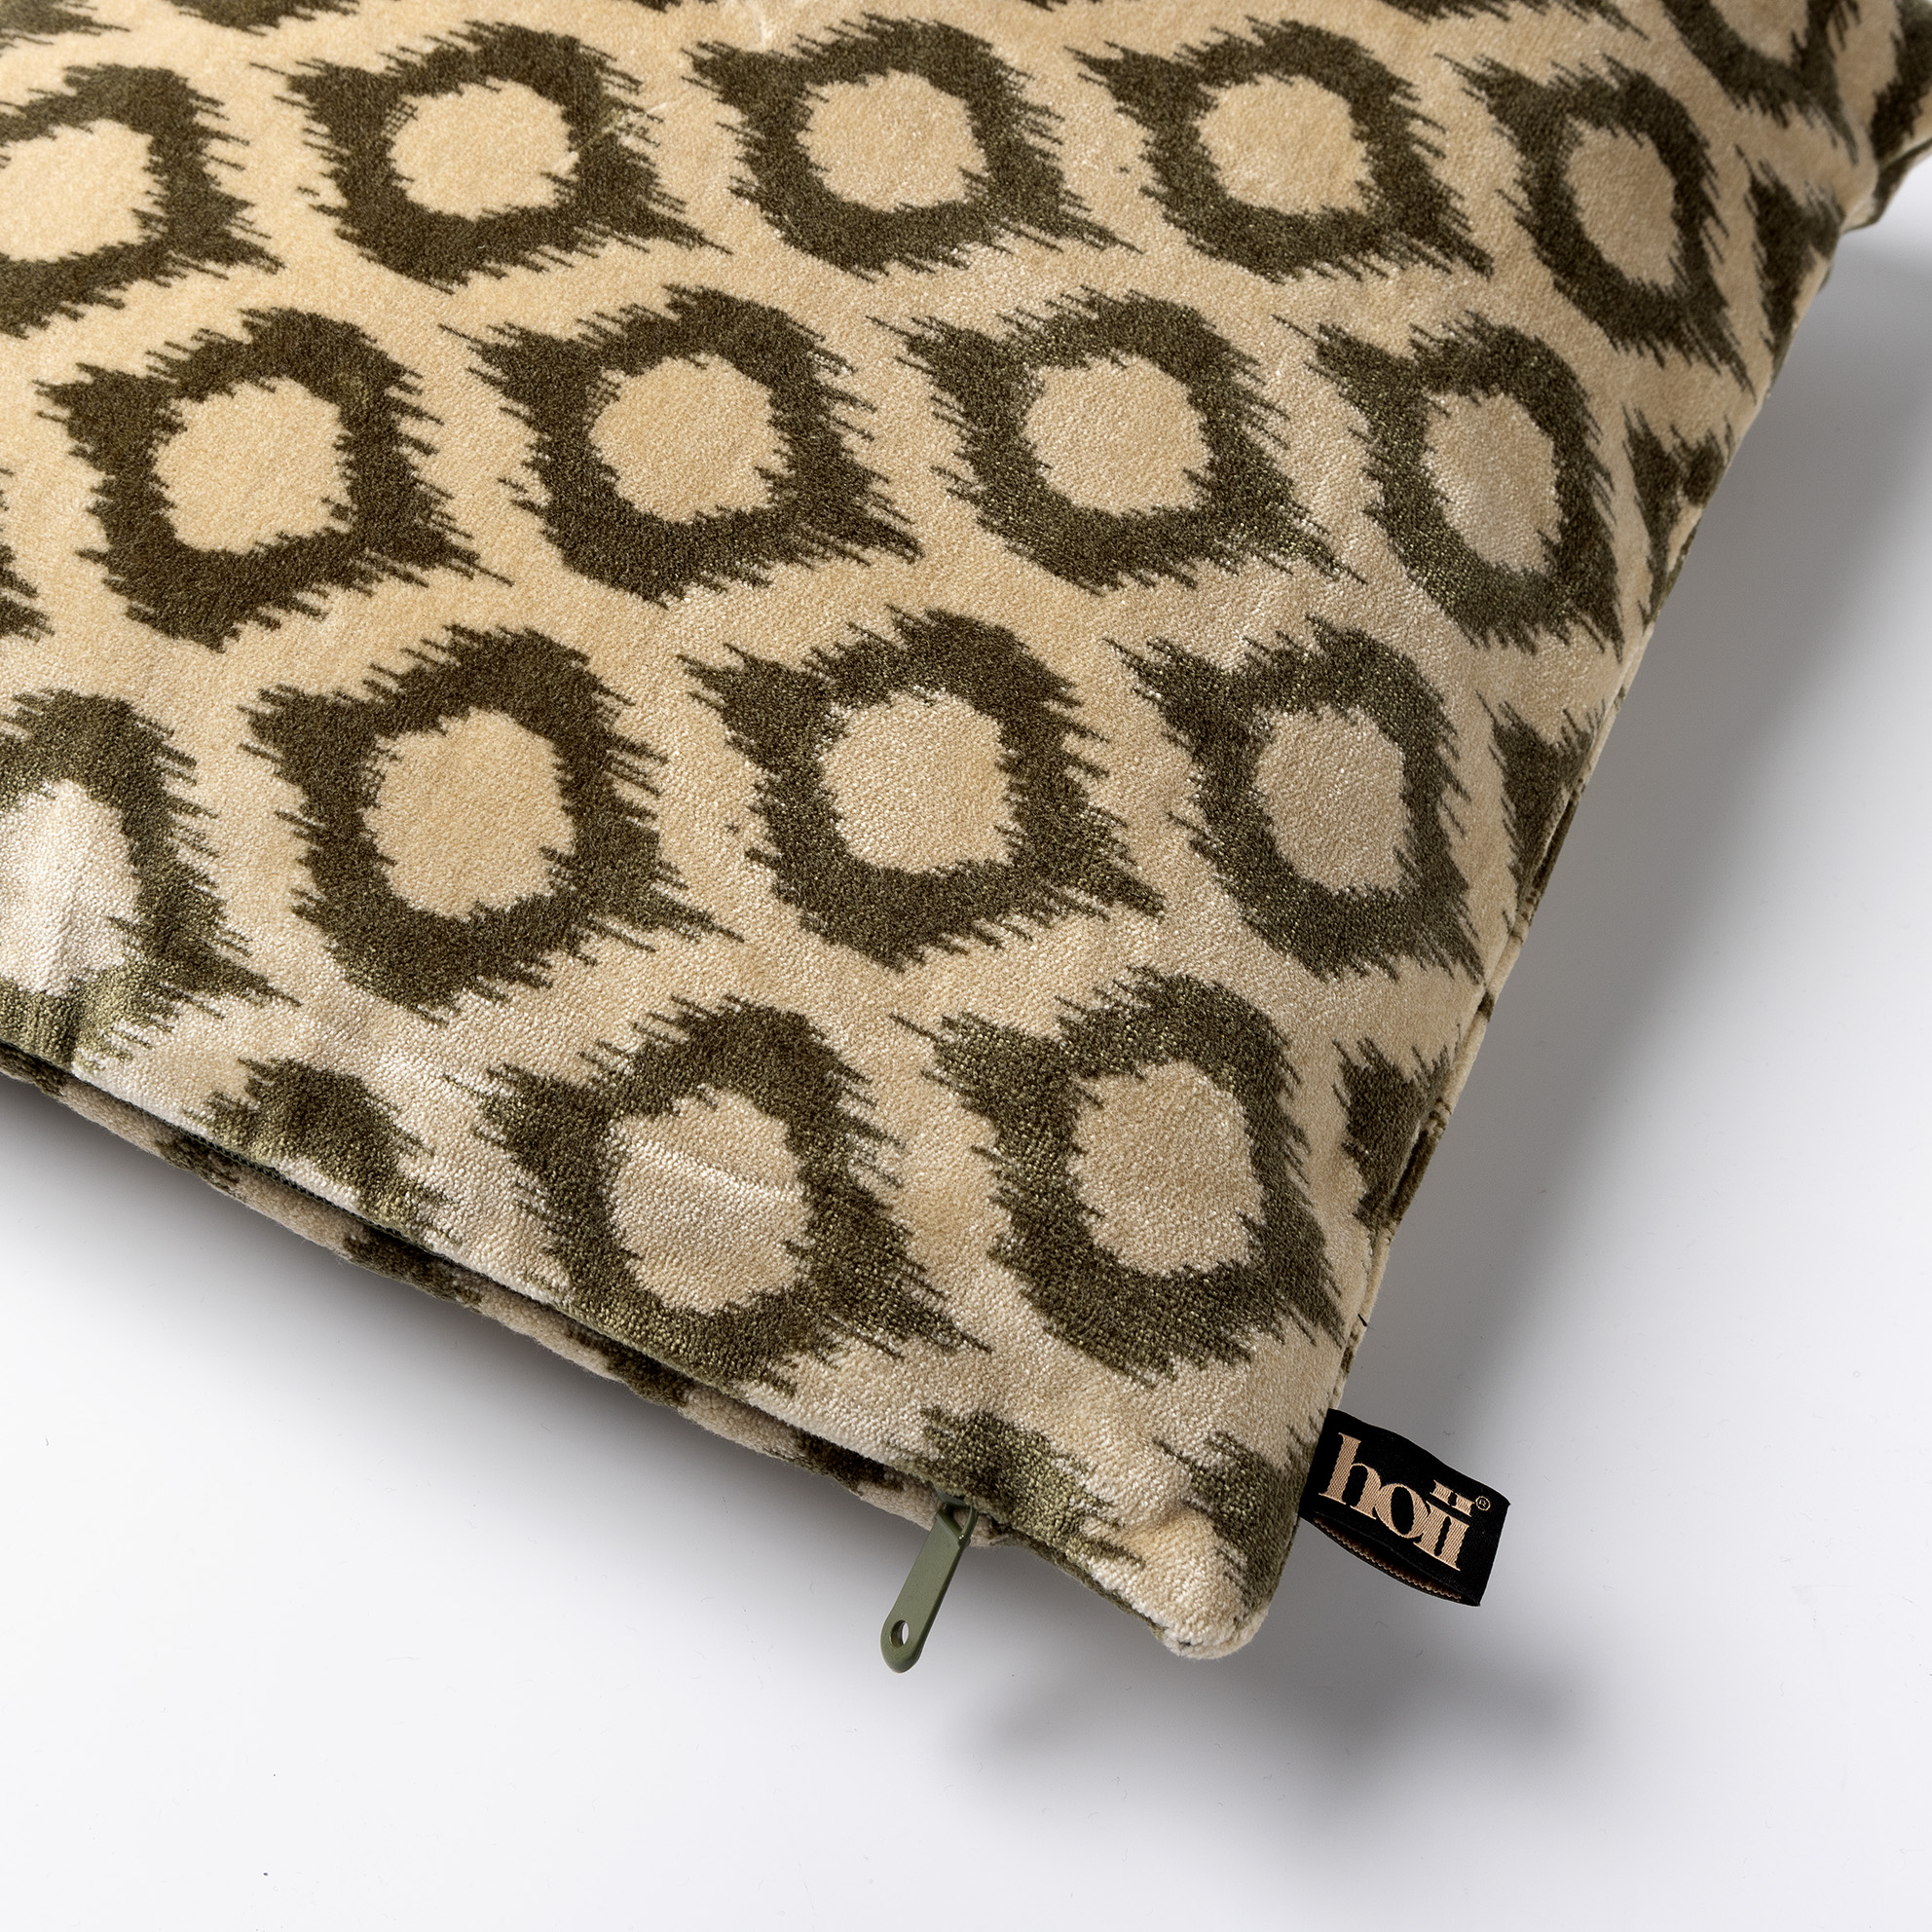 LEONARDO | Cushion | 45x45 cm Military Olive | Green | Hoii | With luxury inner cushion